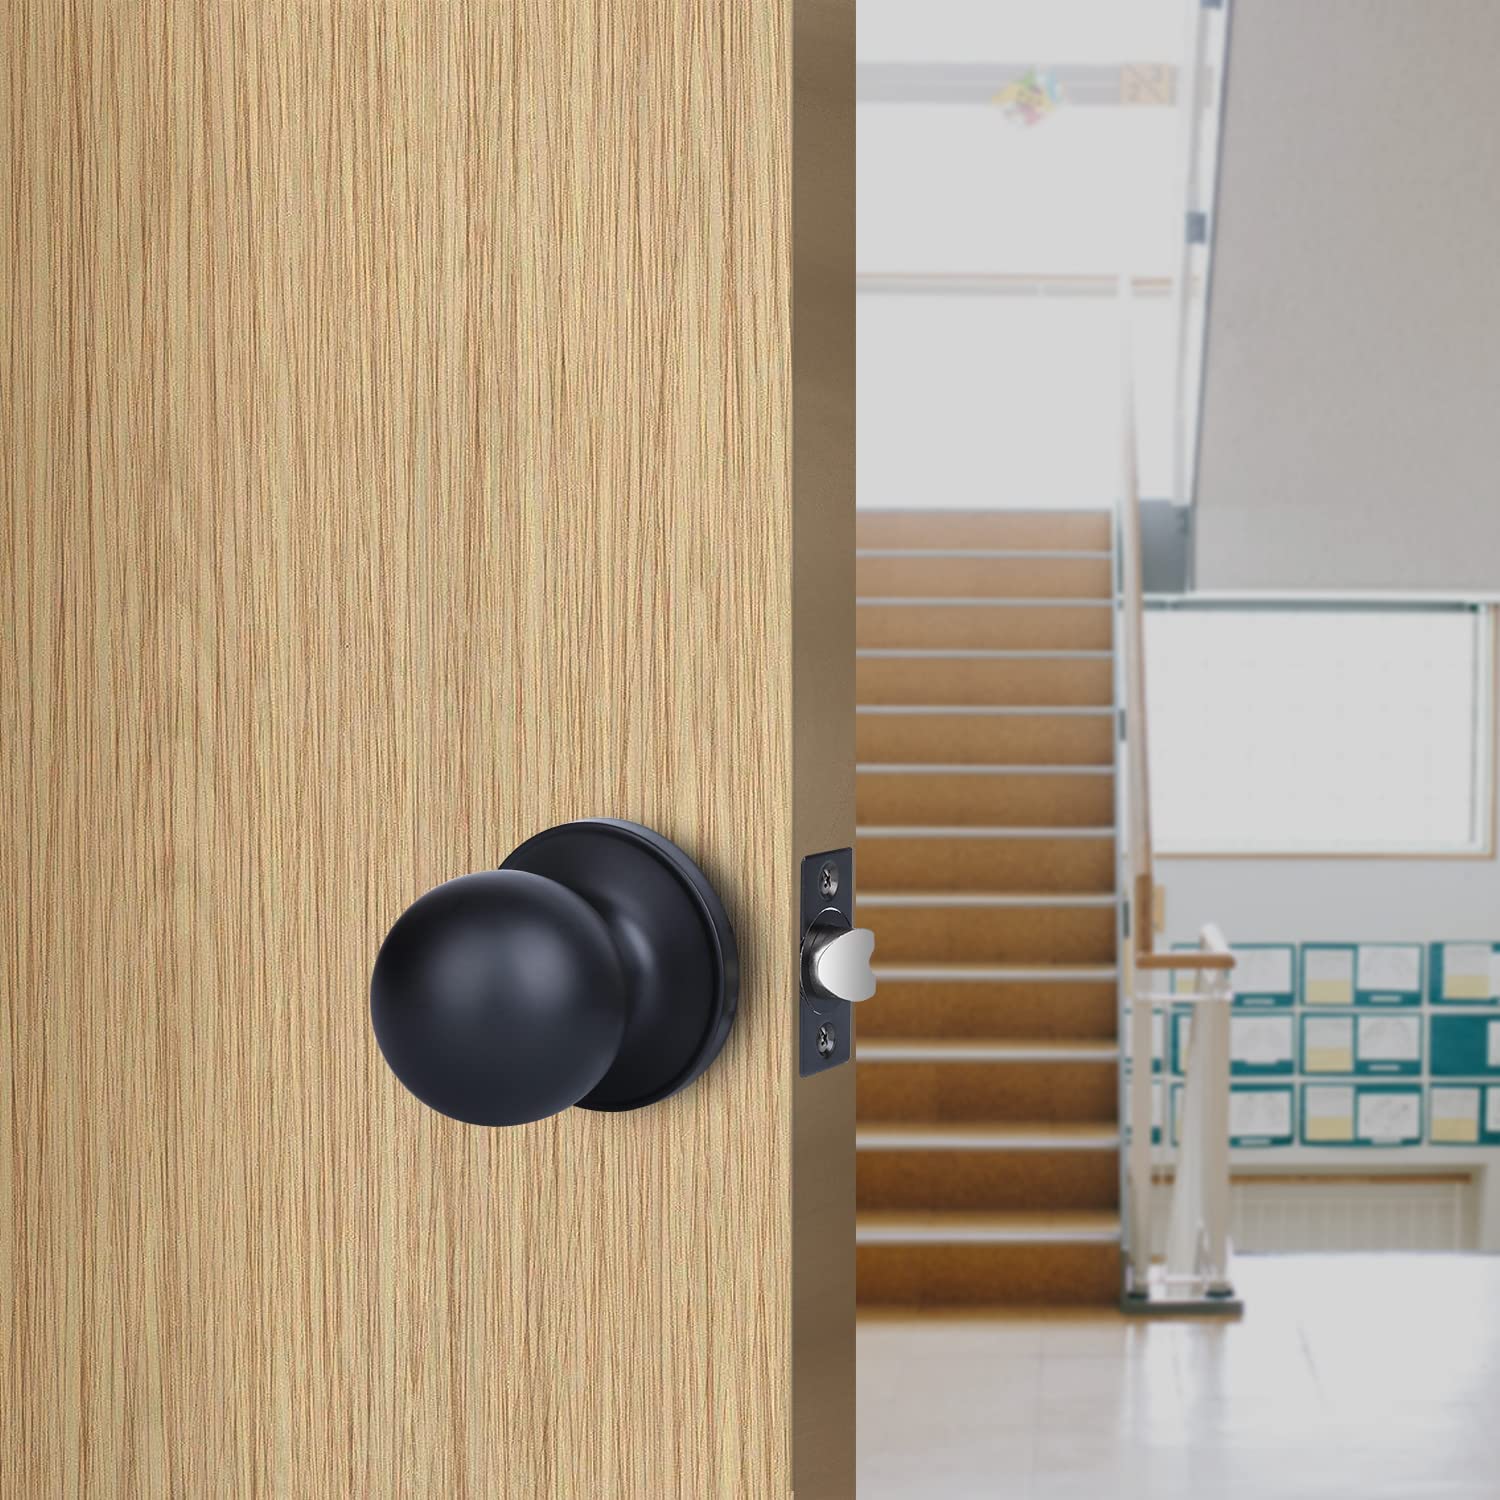 YIHATA Passage DoorKnob, Keyless Round Knob Set for Hallway or Closet,  Interior Doorknobs, Matte Black Finish